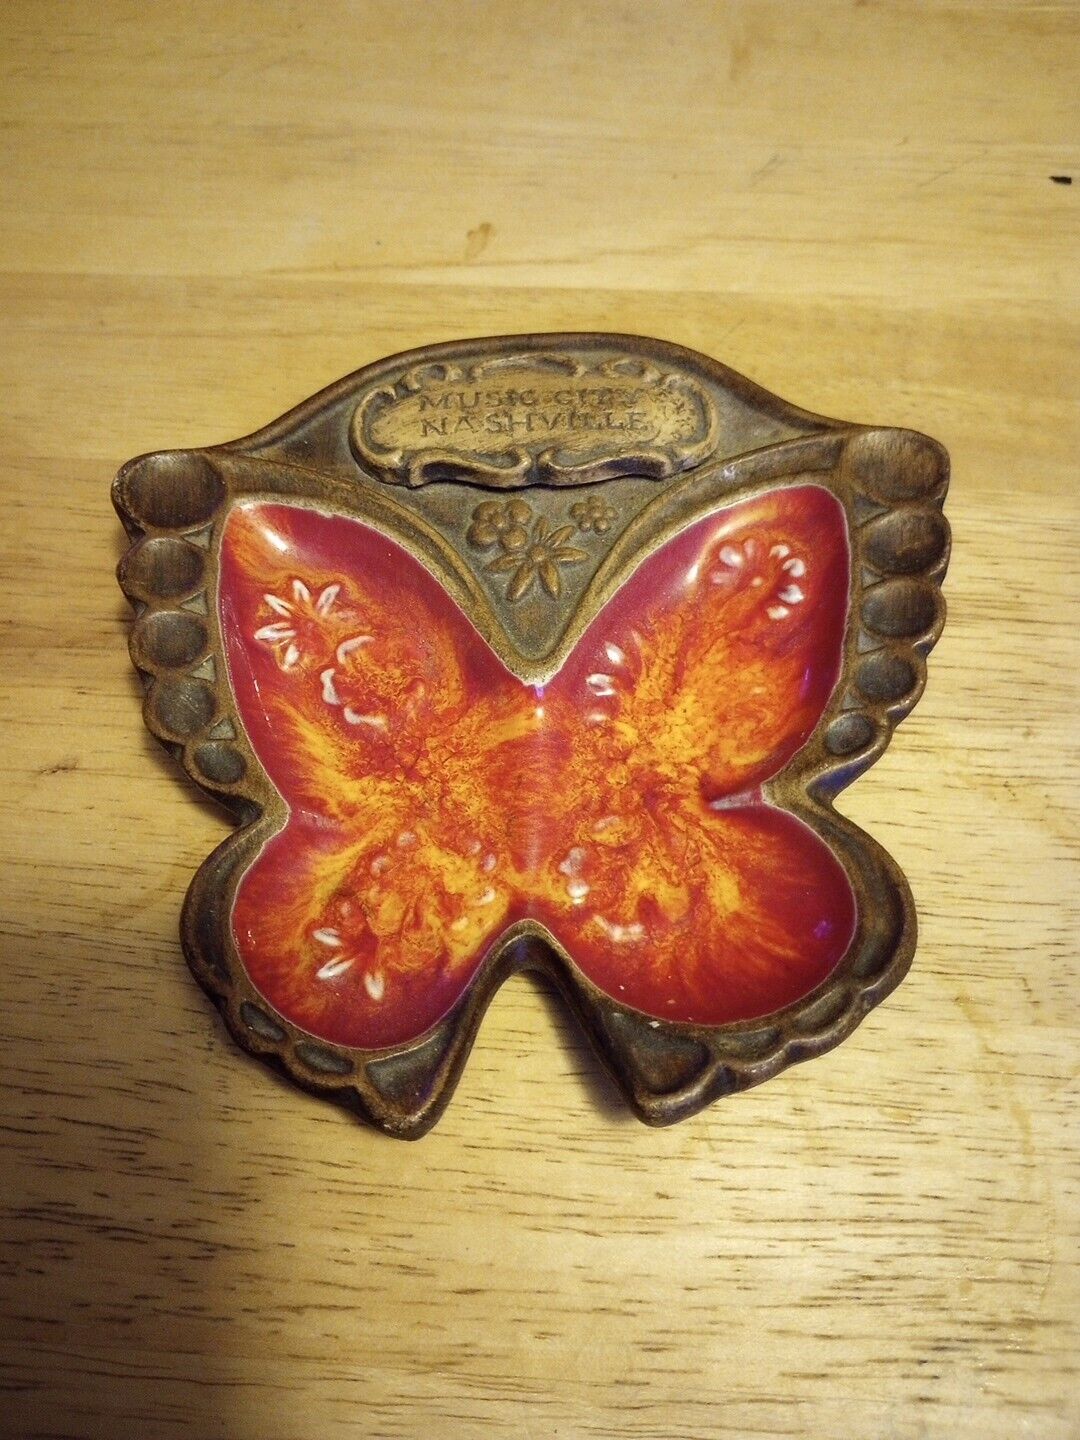 Music City Nashville- Orange Butterfly Ashtray - Trinket -Treasure Craft Vintage